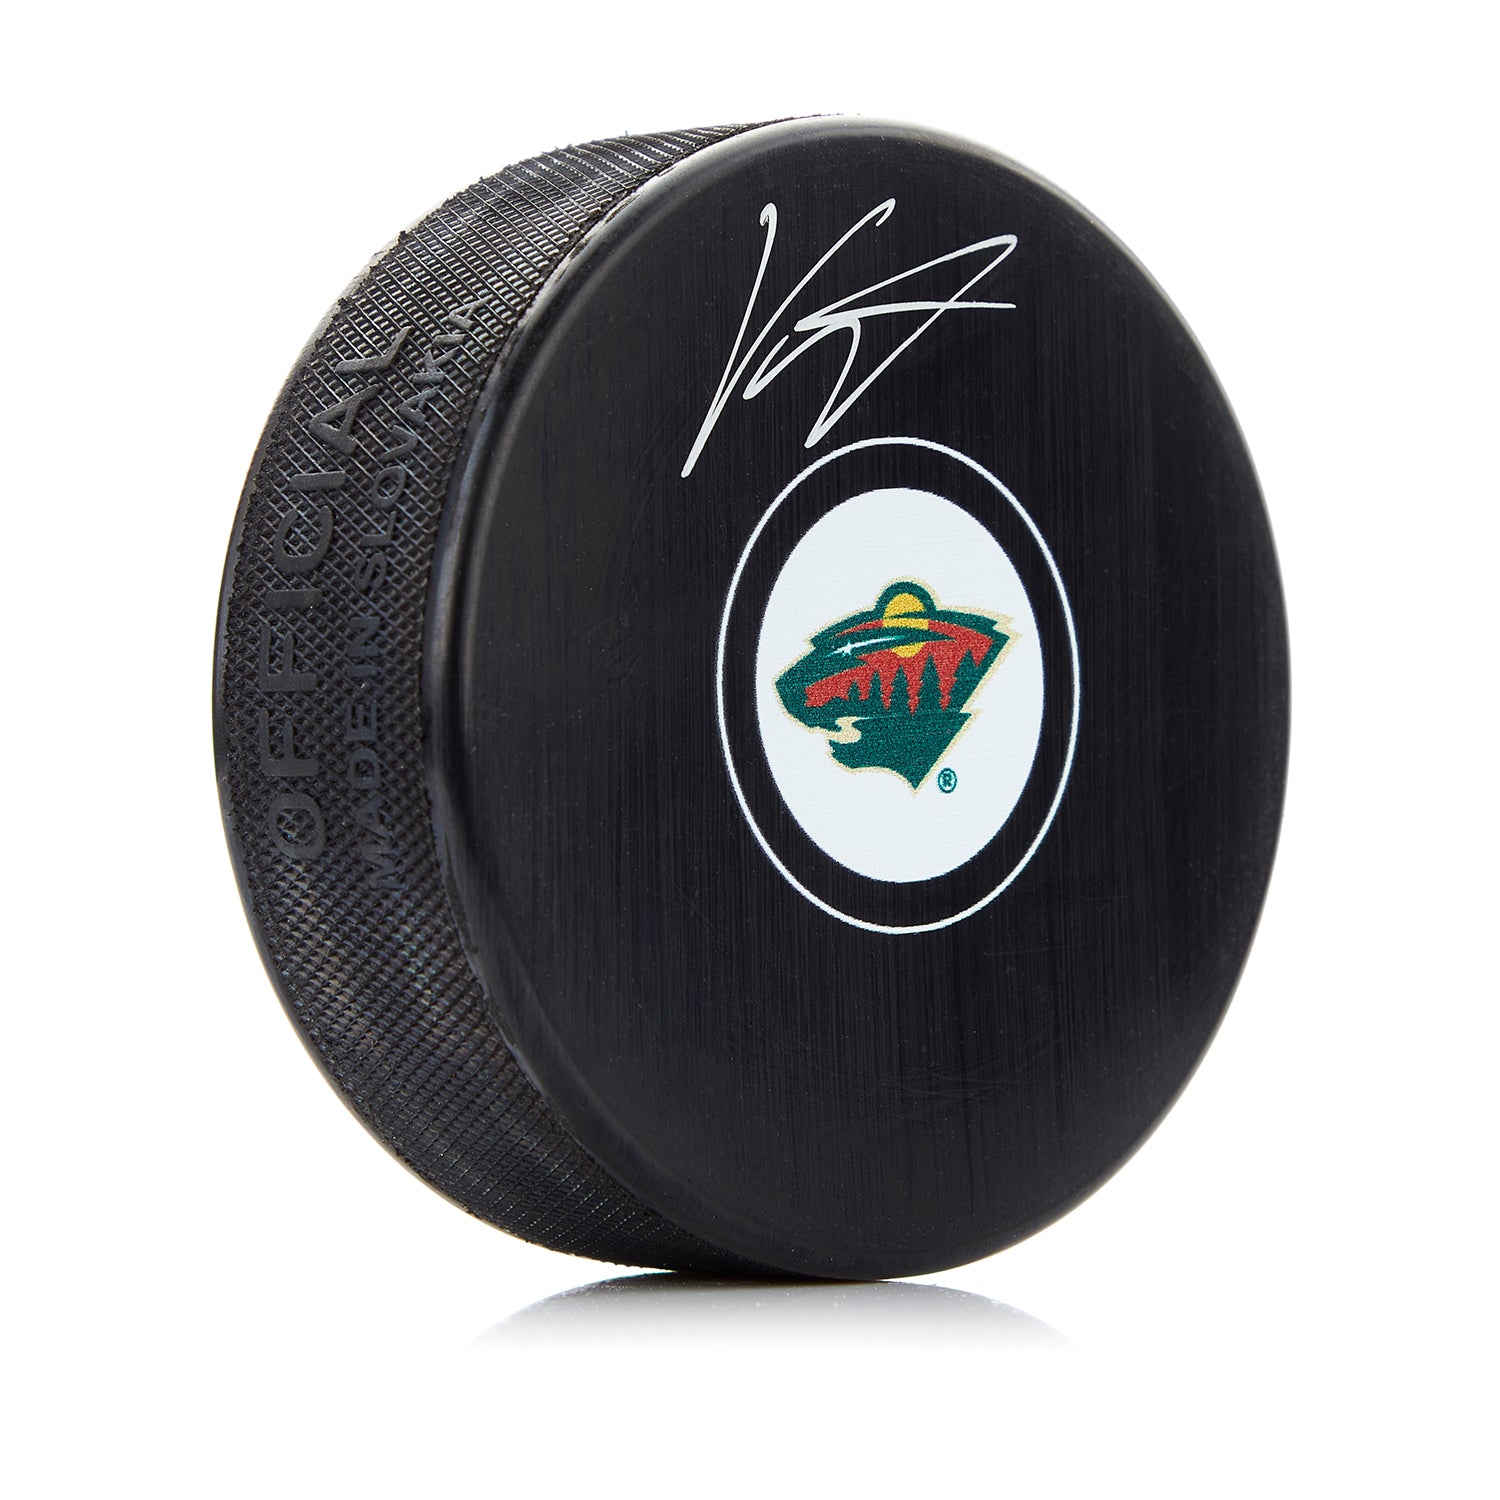 Kirill Kaprizov Autographed Minnesota Wild Hockey Puck